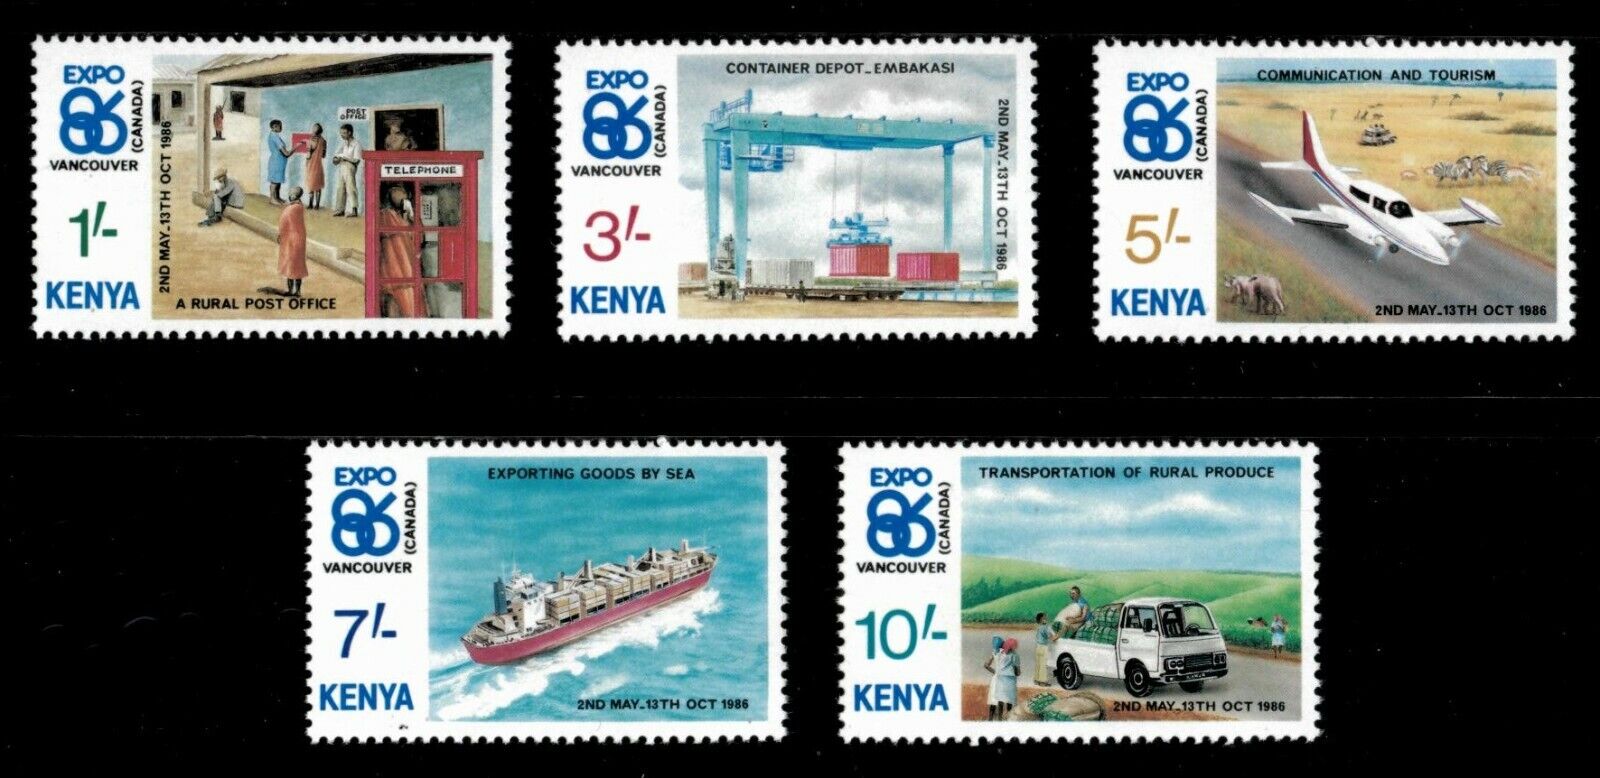 Kenya 1986 - Expo '86, Shipping, Transport, Travel - Set Of 5v - Sc 375-79 - Mnh